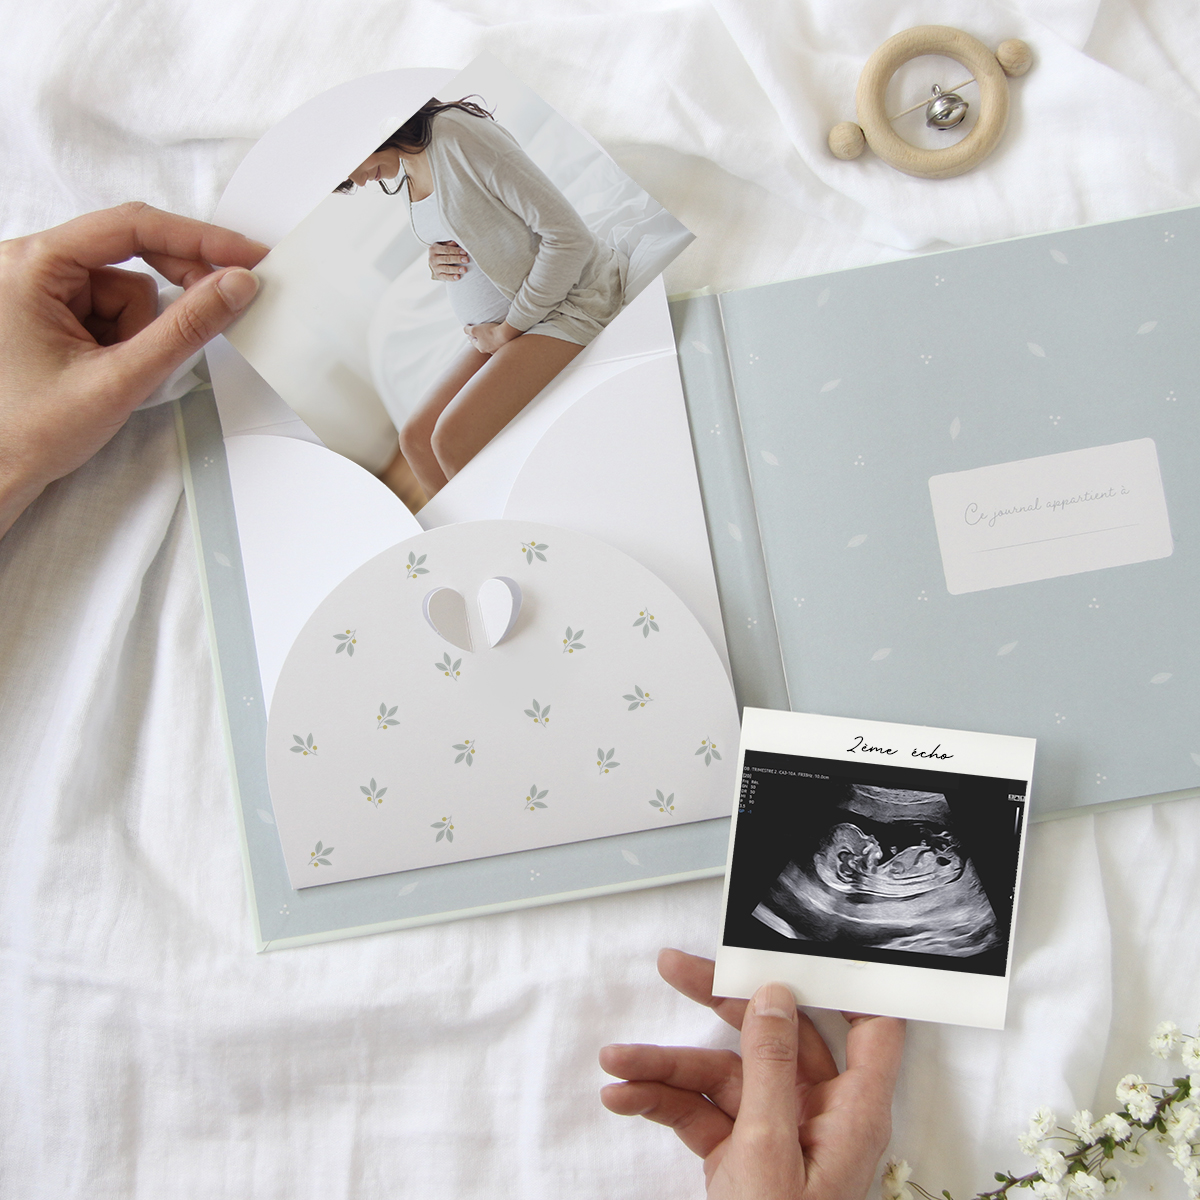 ☆Carnet de grossesse Cigogne-Journal de grossesse bleu-Cahier de grossesse☆